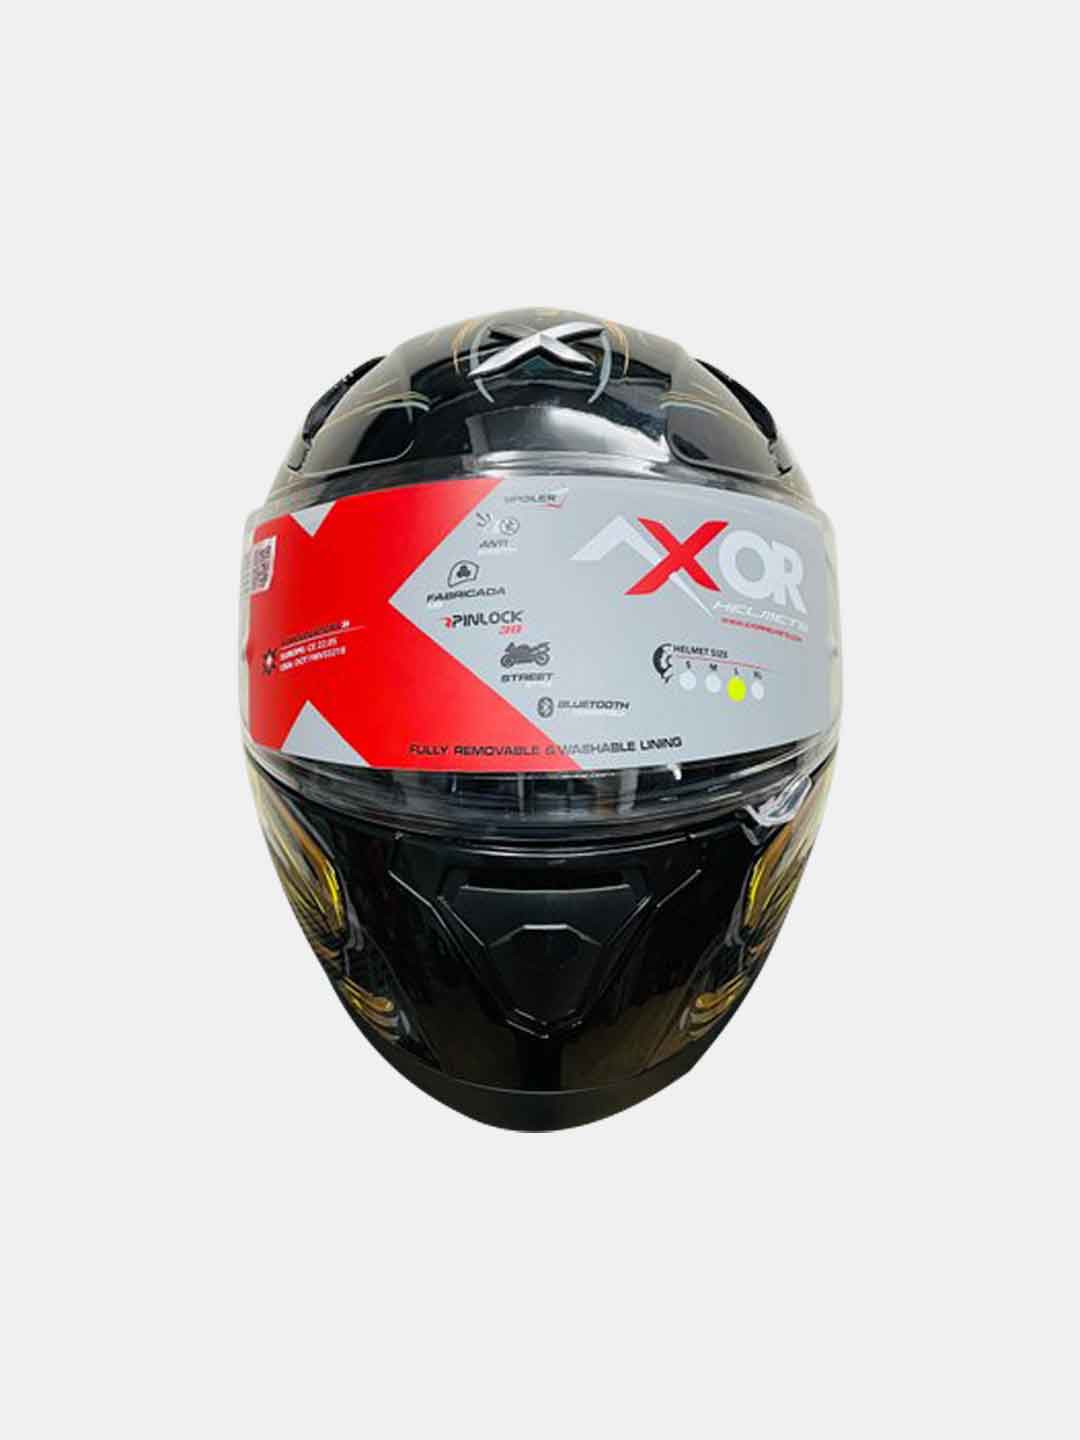 Axor Apex Seadevil Glossy Black Gold Helmet